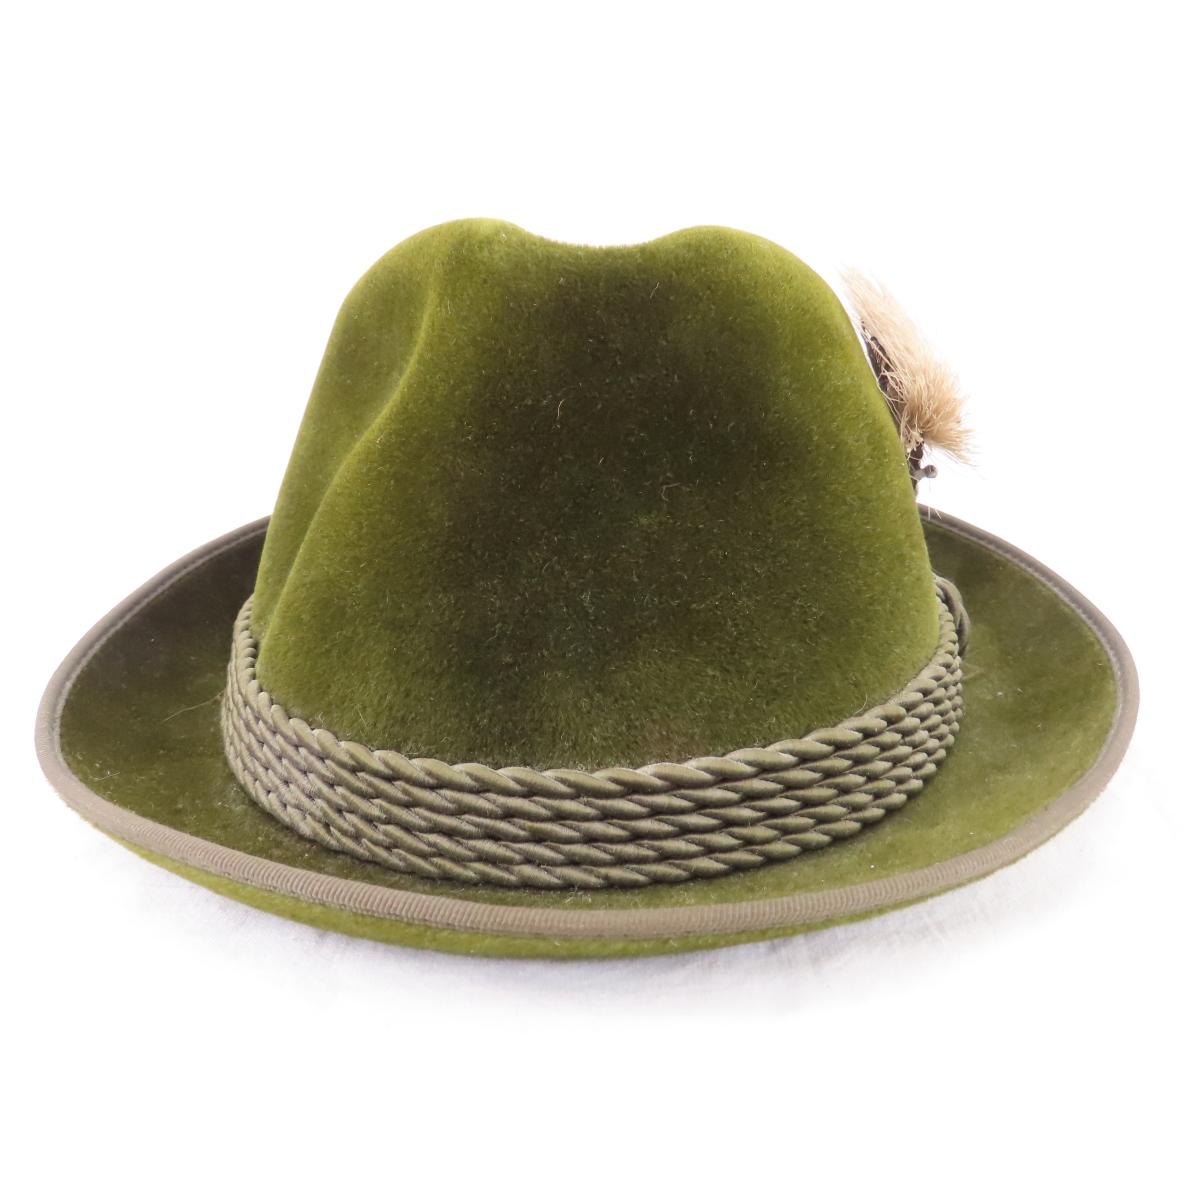 German Lederhosen, Edelweib-Hut Hat, & More